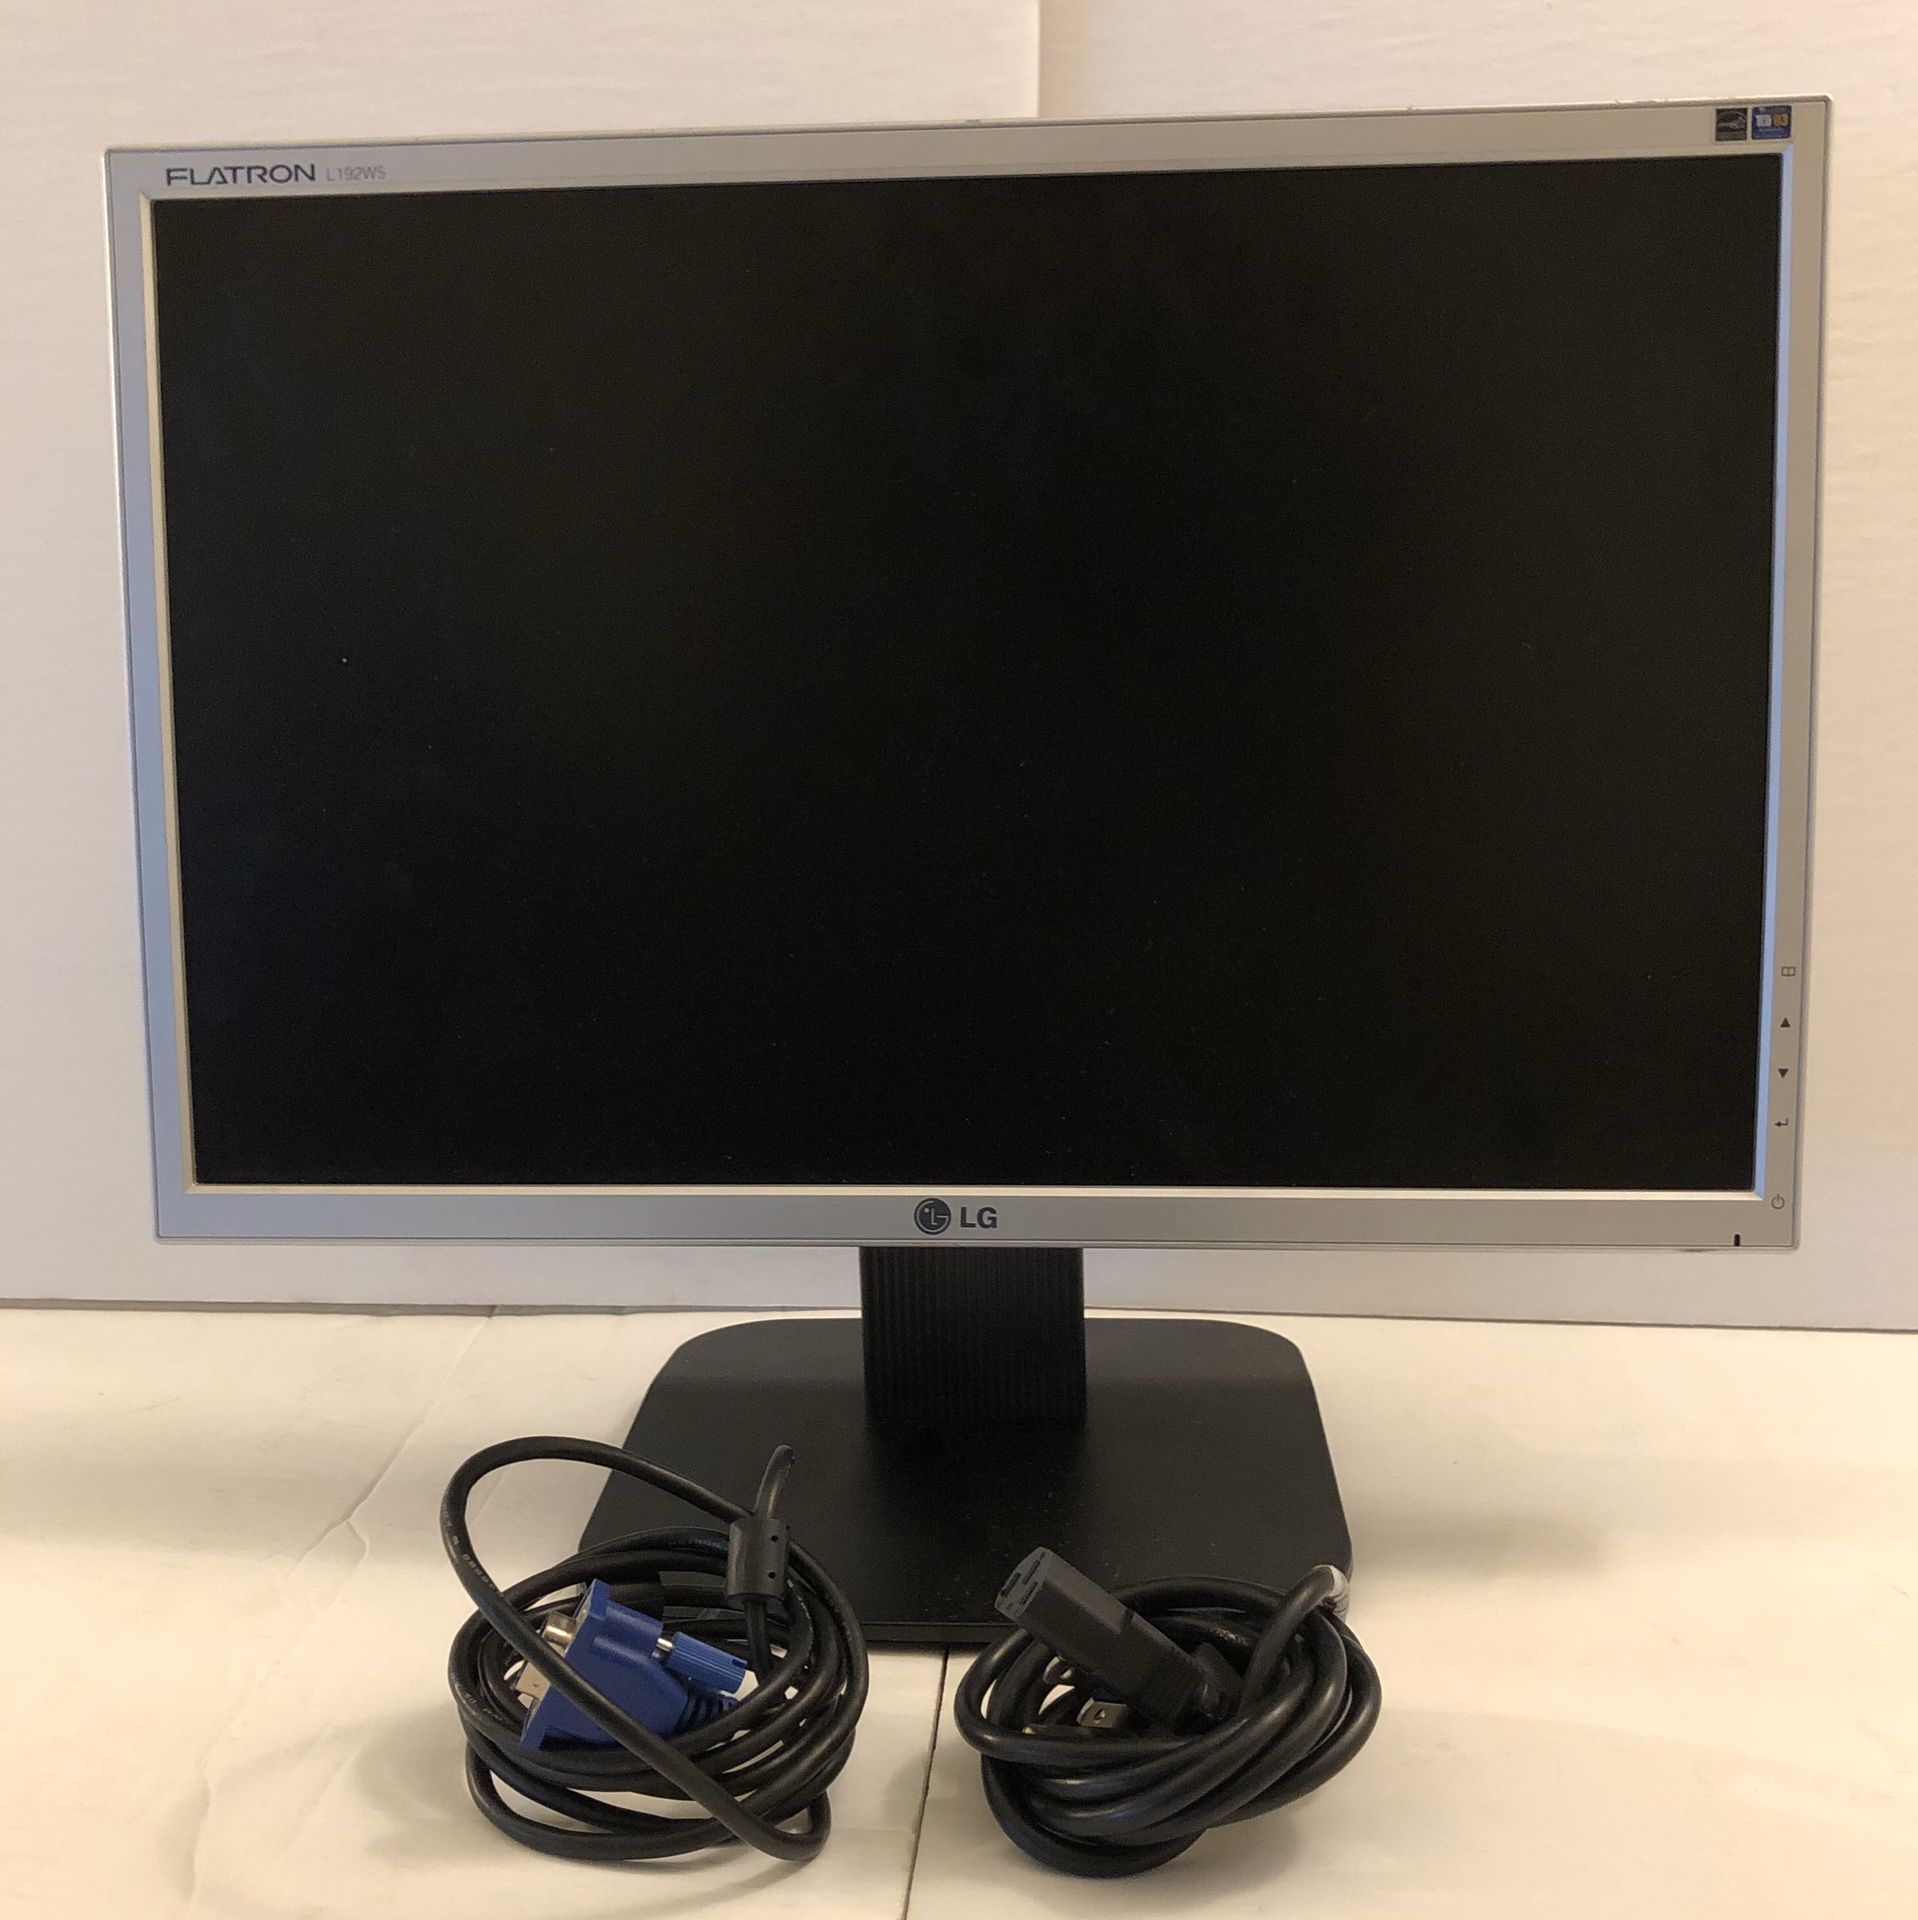 Flatron L19WS 19” Desktop Computer Monitor